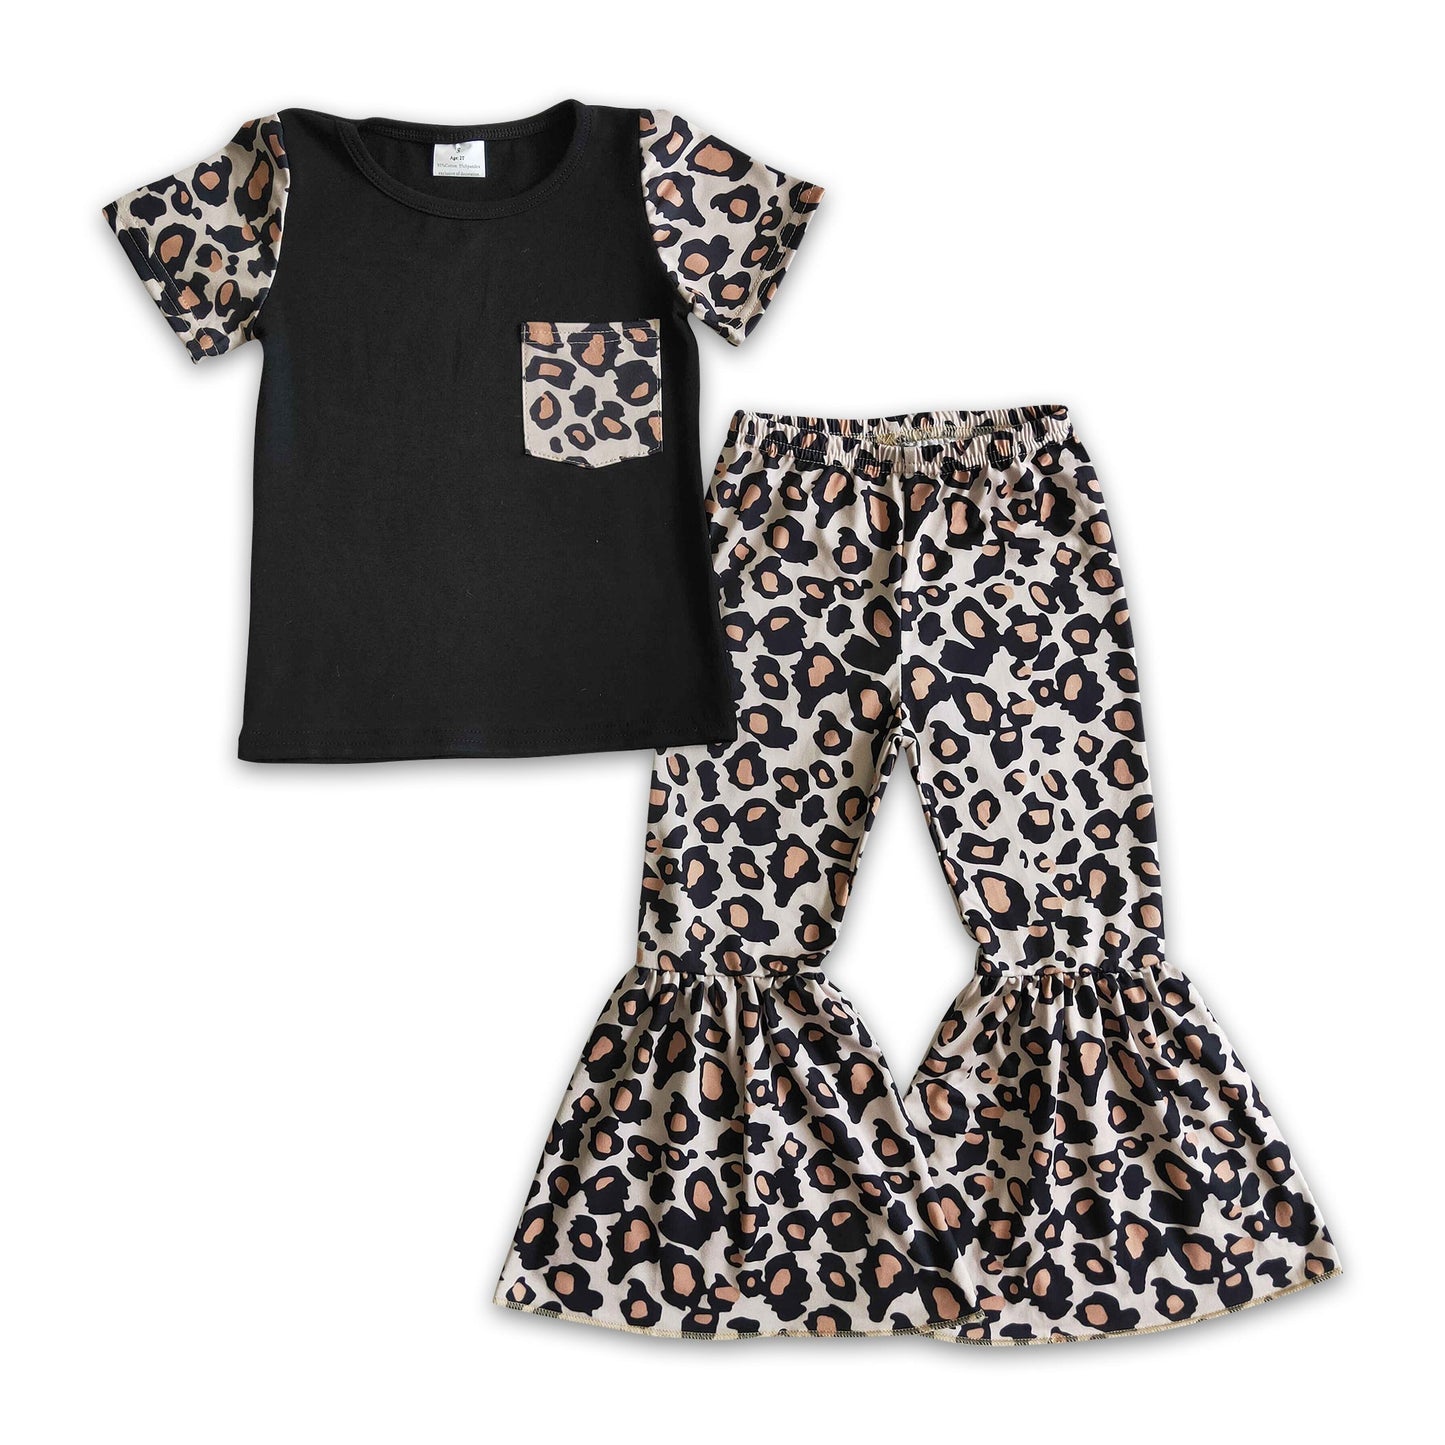 Girl Pocket Leopard outfit